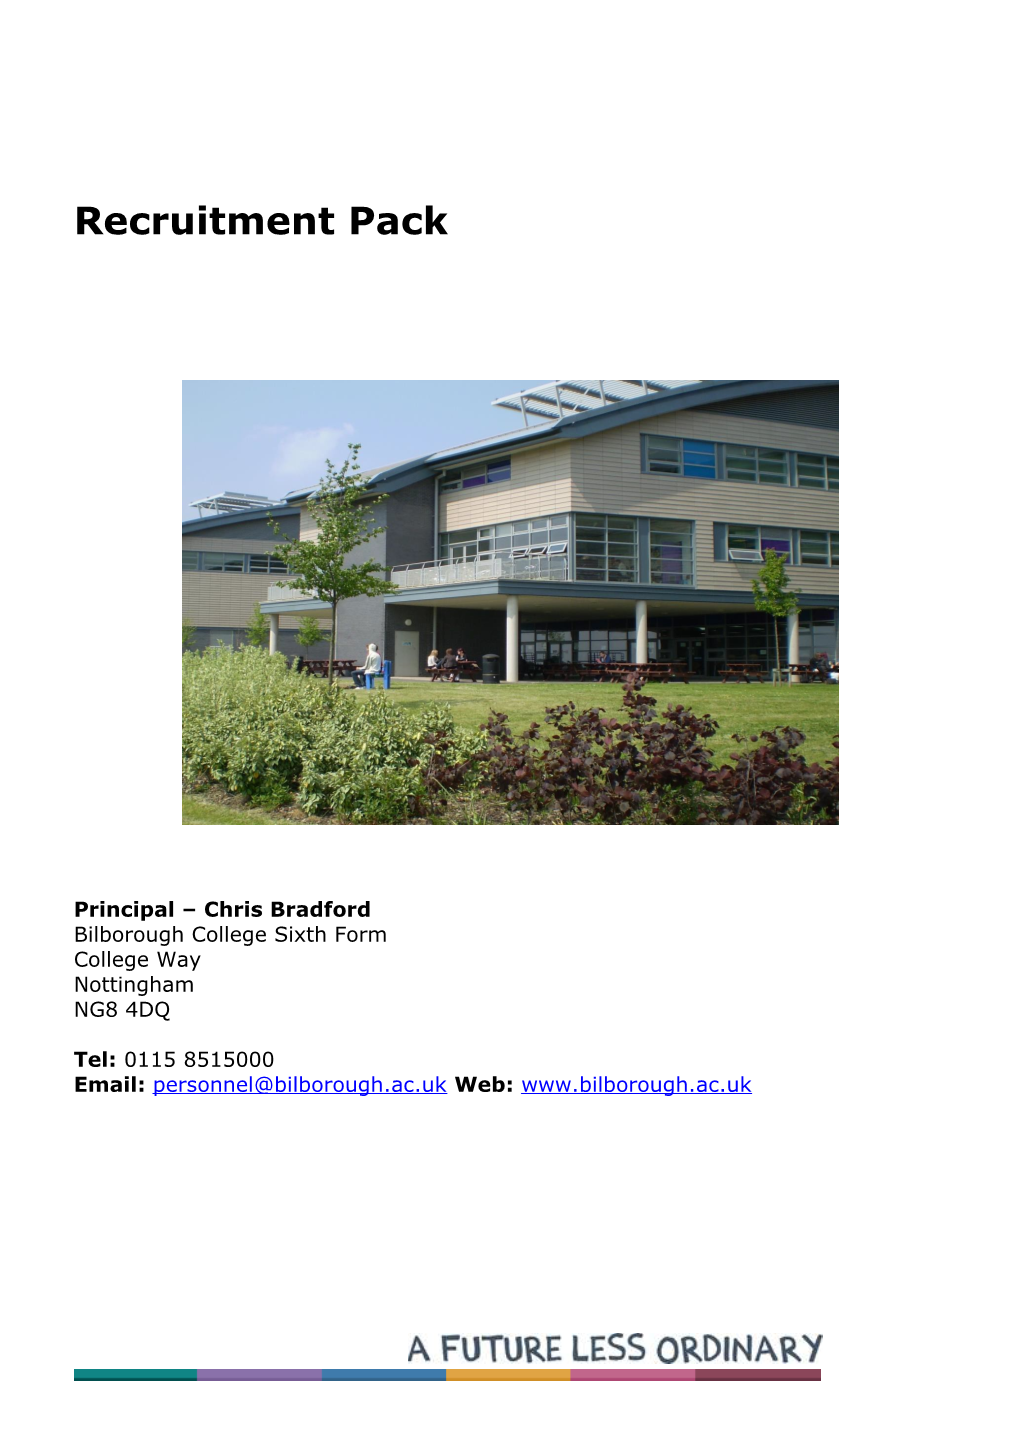 Recruitment Pack s1